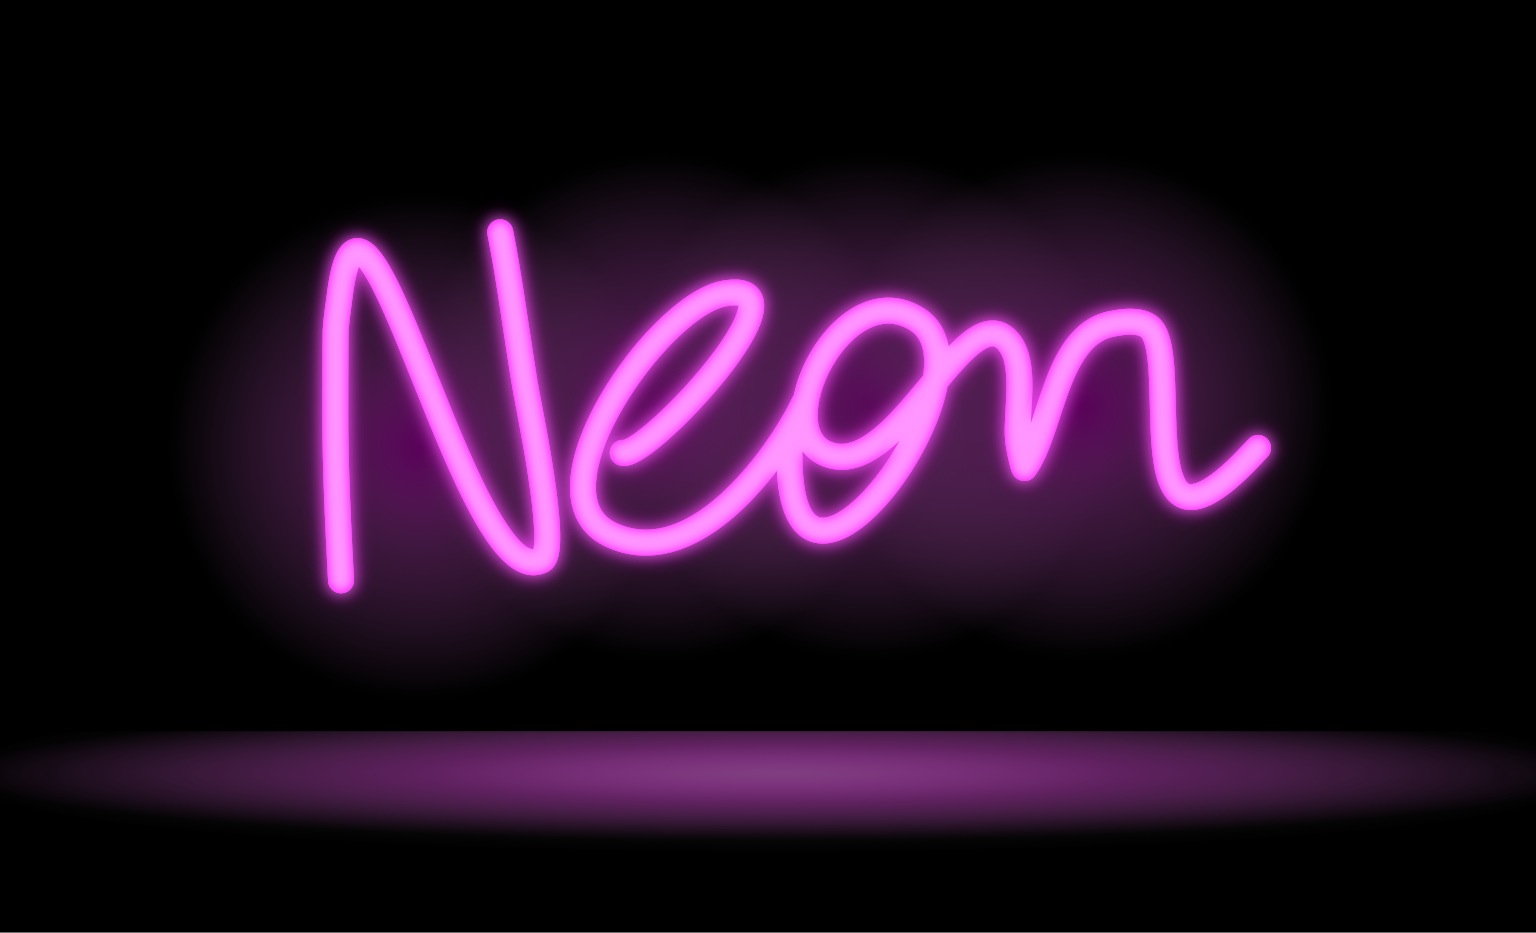 Digitaldrawer Drawing A Neon Sign In Inkpad